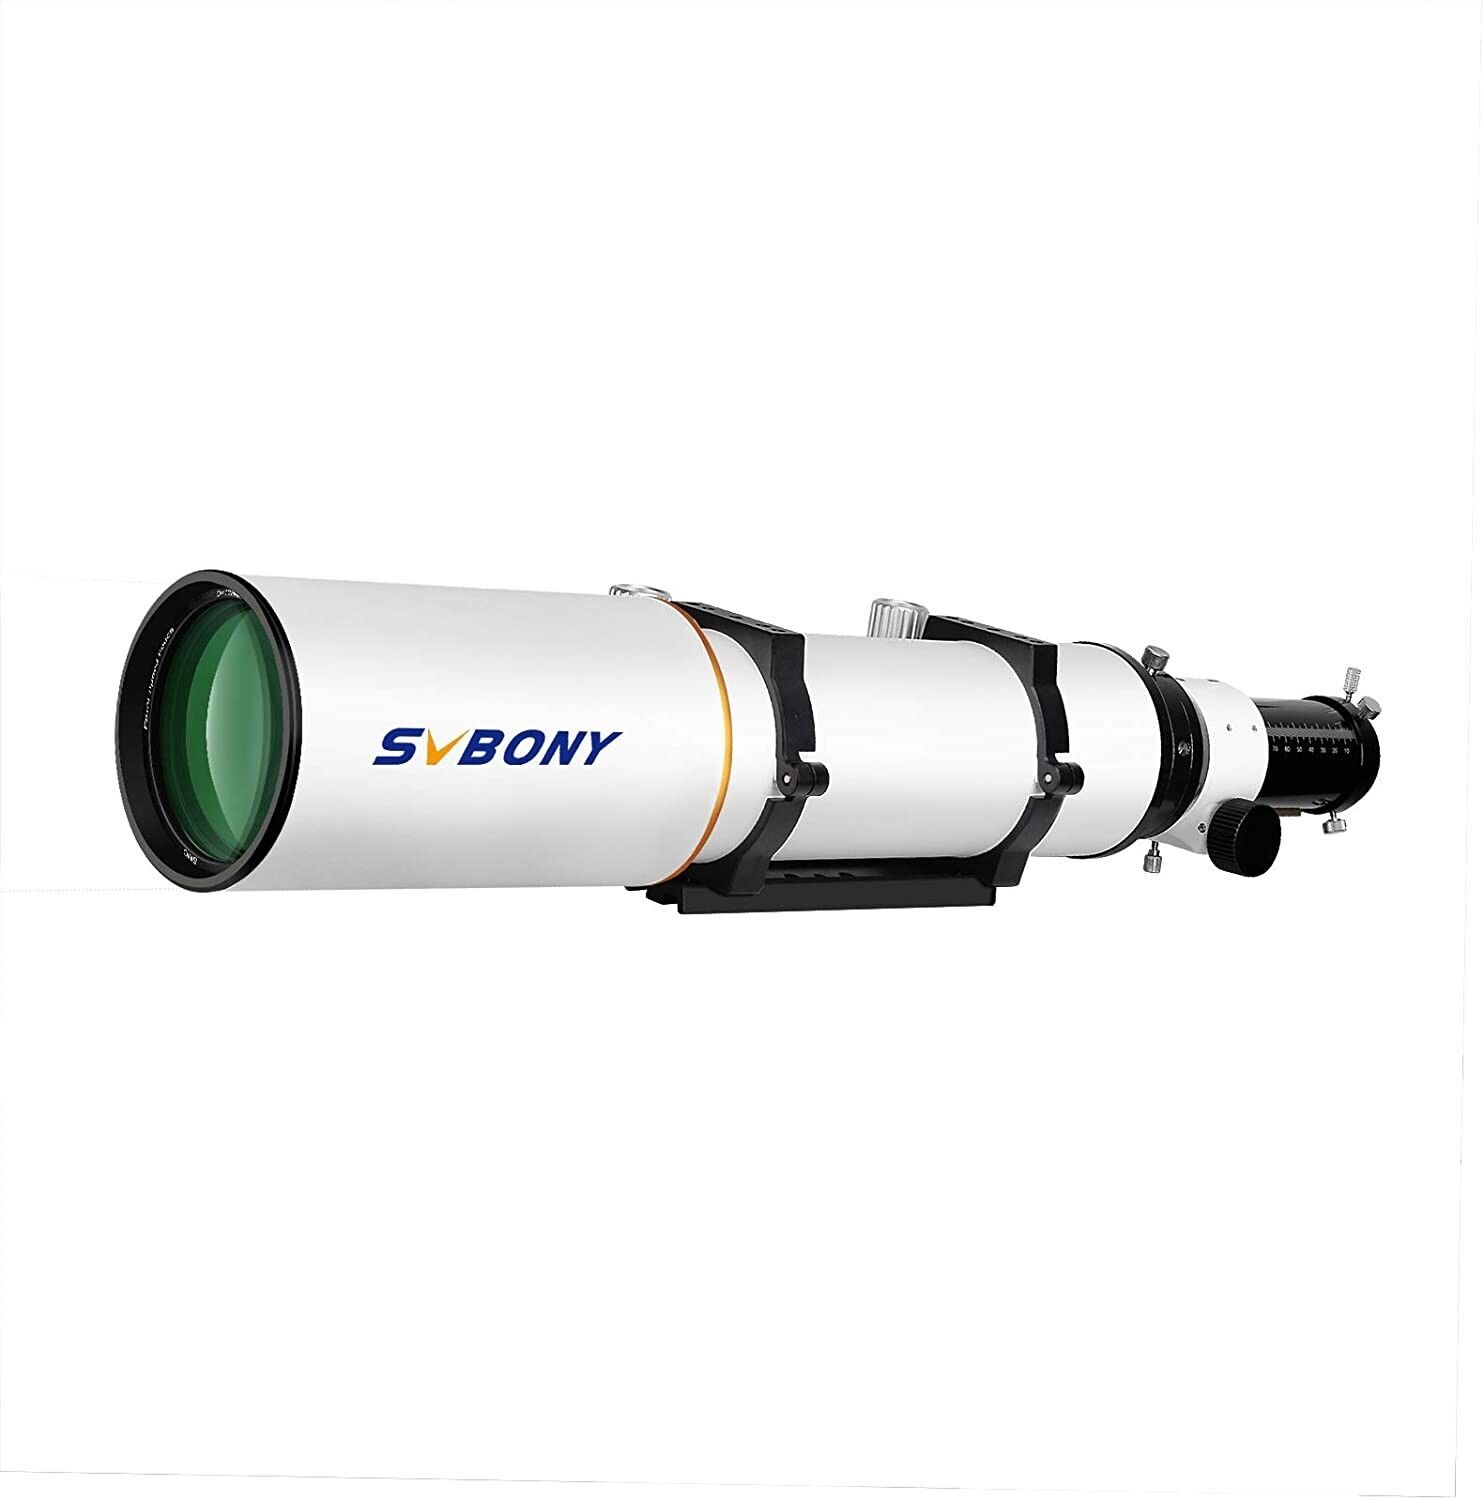 SVBONY SV503 Telescope, 102ED F7 Extra Low Dispersion Achromatic Refractor OTA,